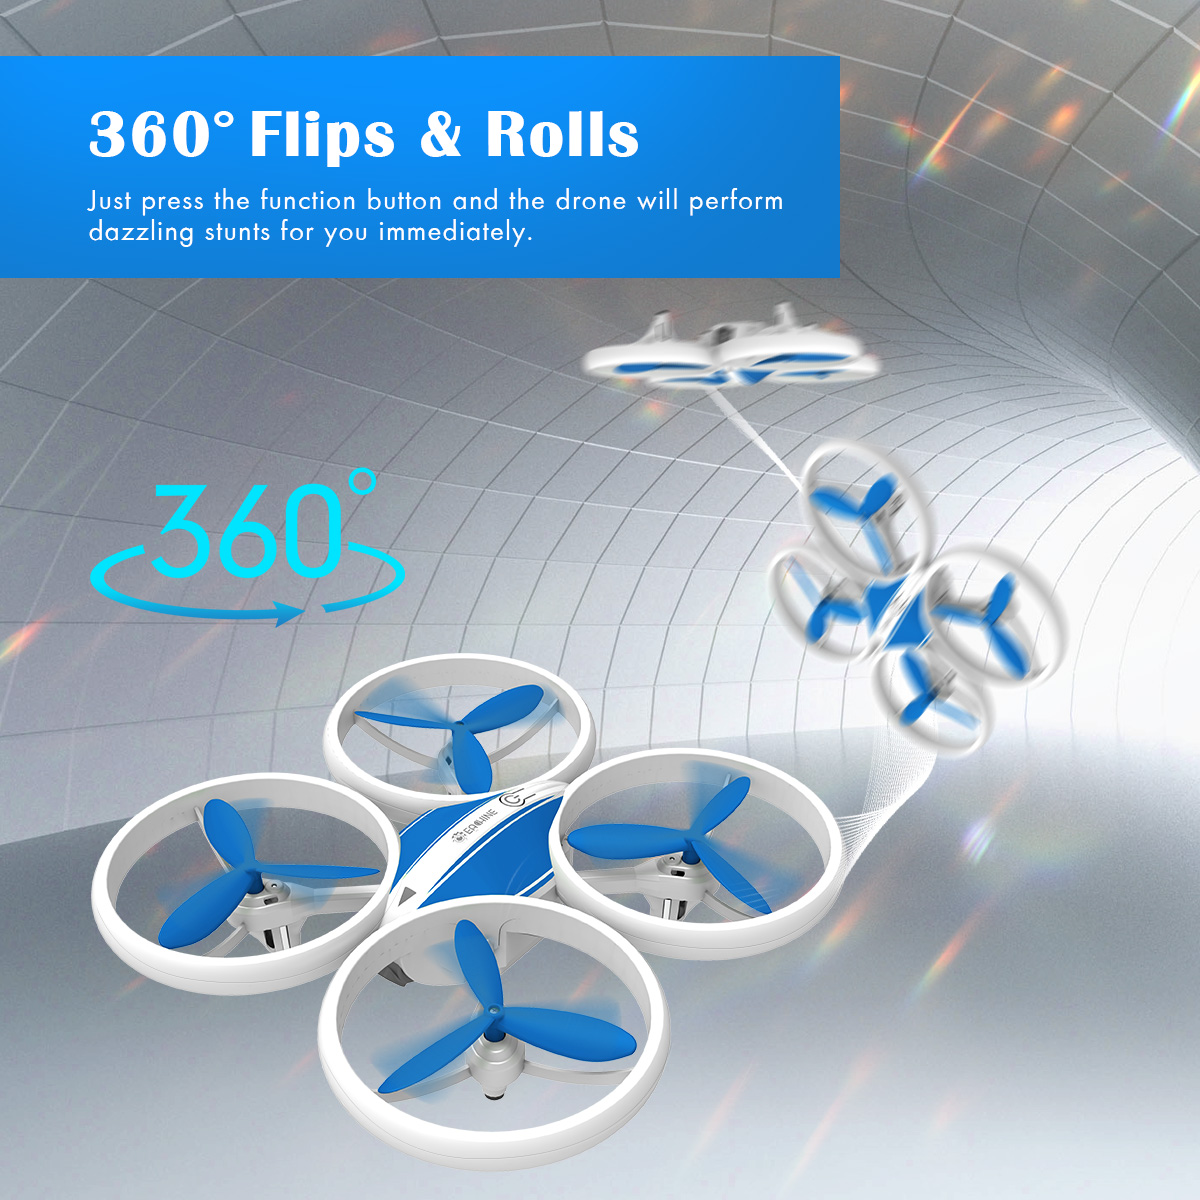 Eachine-E65HW-WIFI-FPV-With-1080P-HD-Camera-Altitude-Hold-Headless-Mode-RC-Drone-Quadcopter-1742047-2